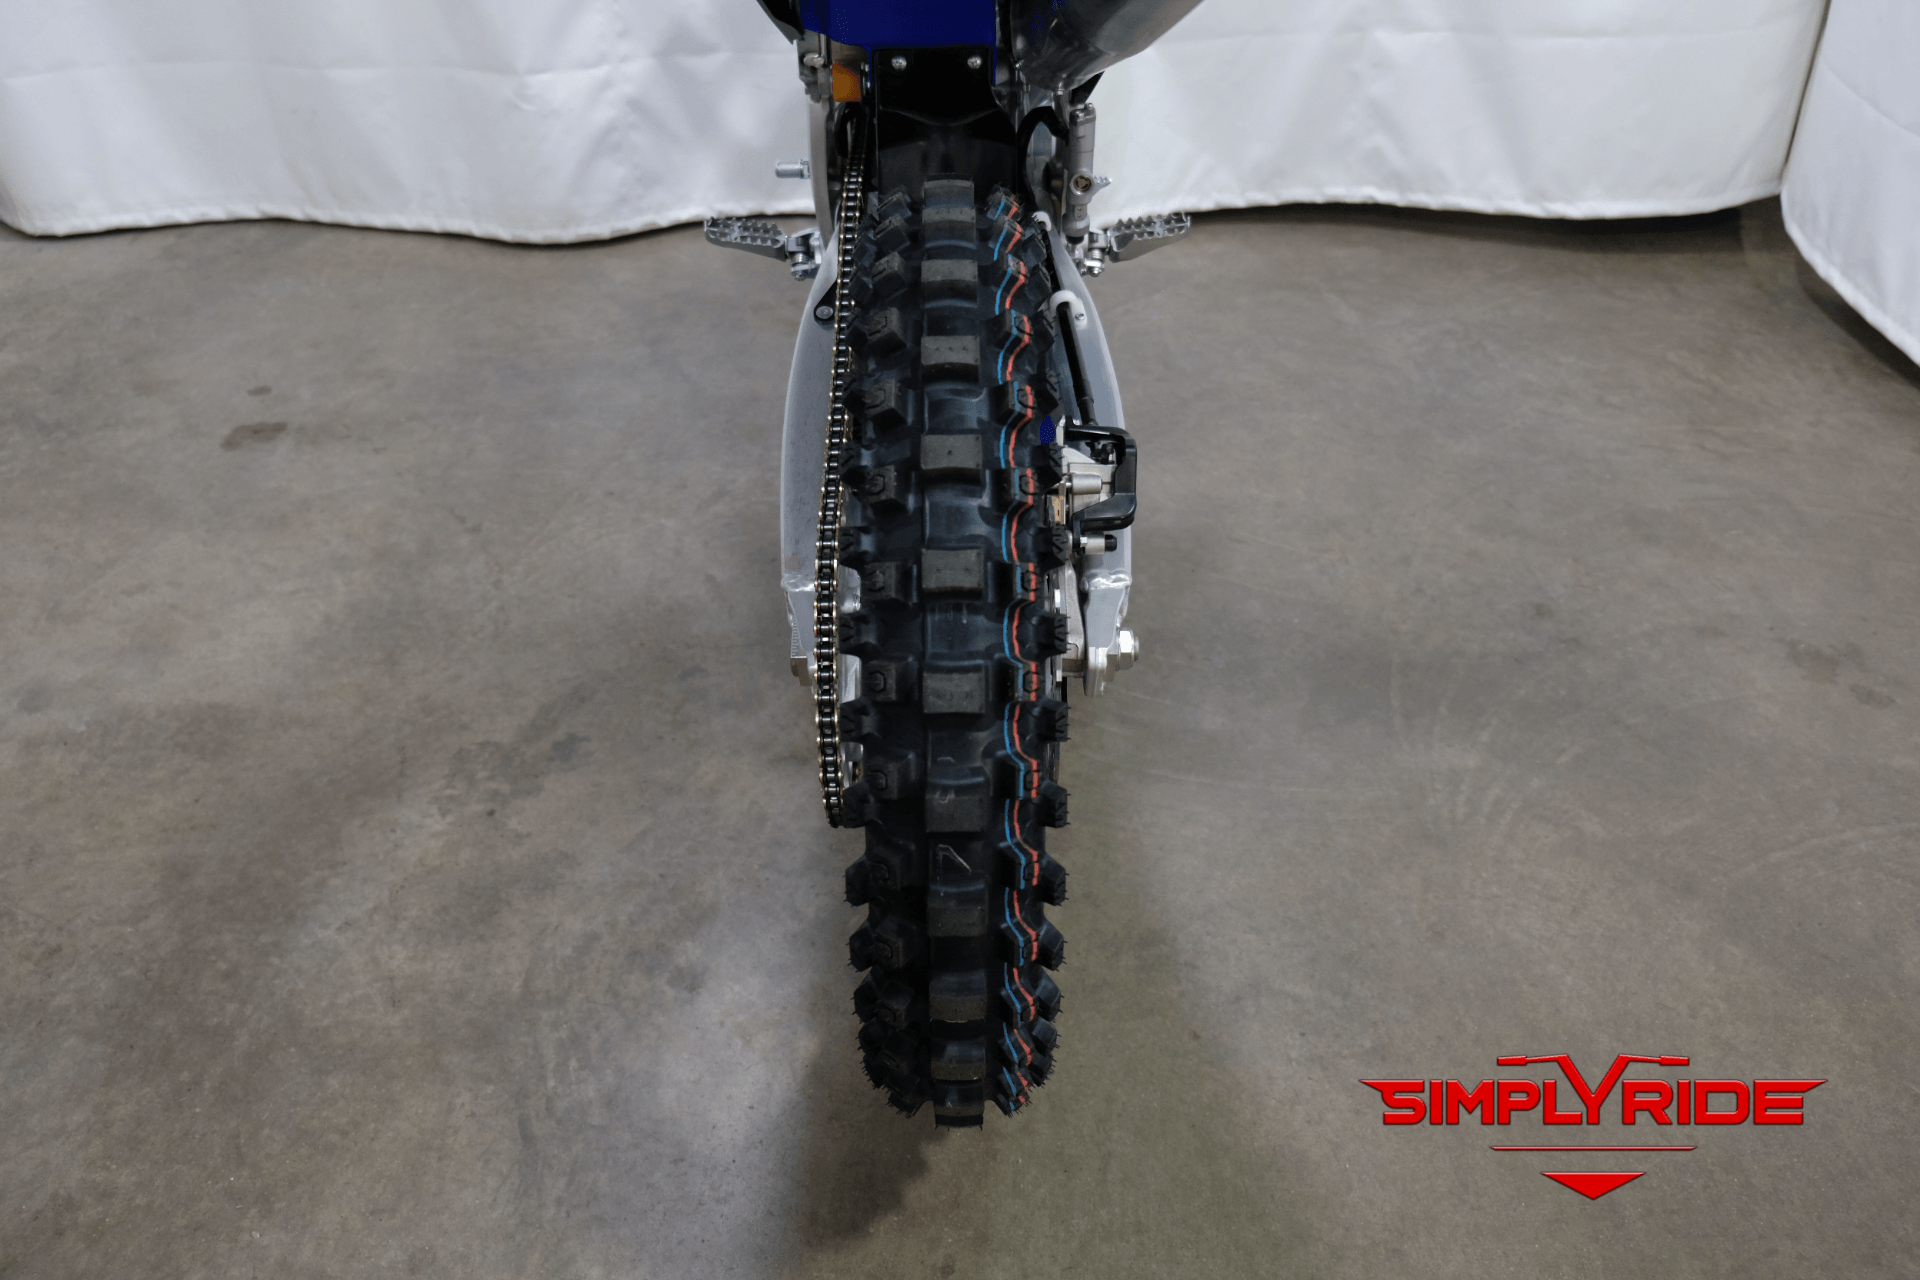 2022 Yamaha YZ250F in Eden Prairie, Minnesota - Photo 17